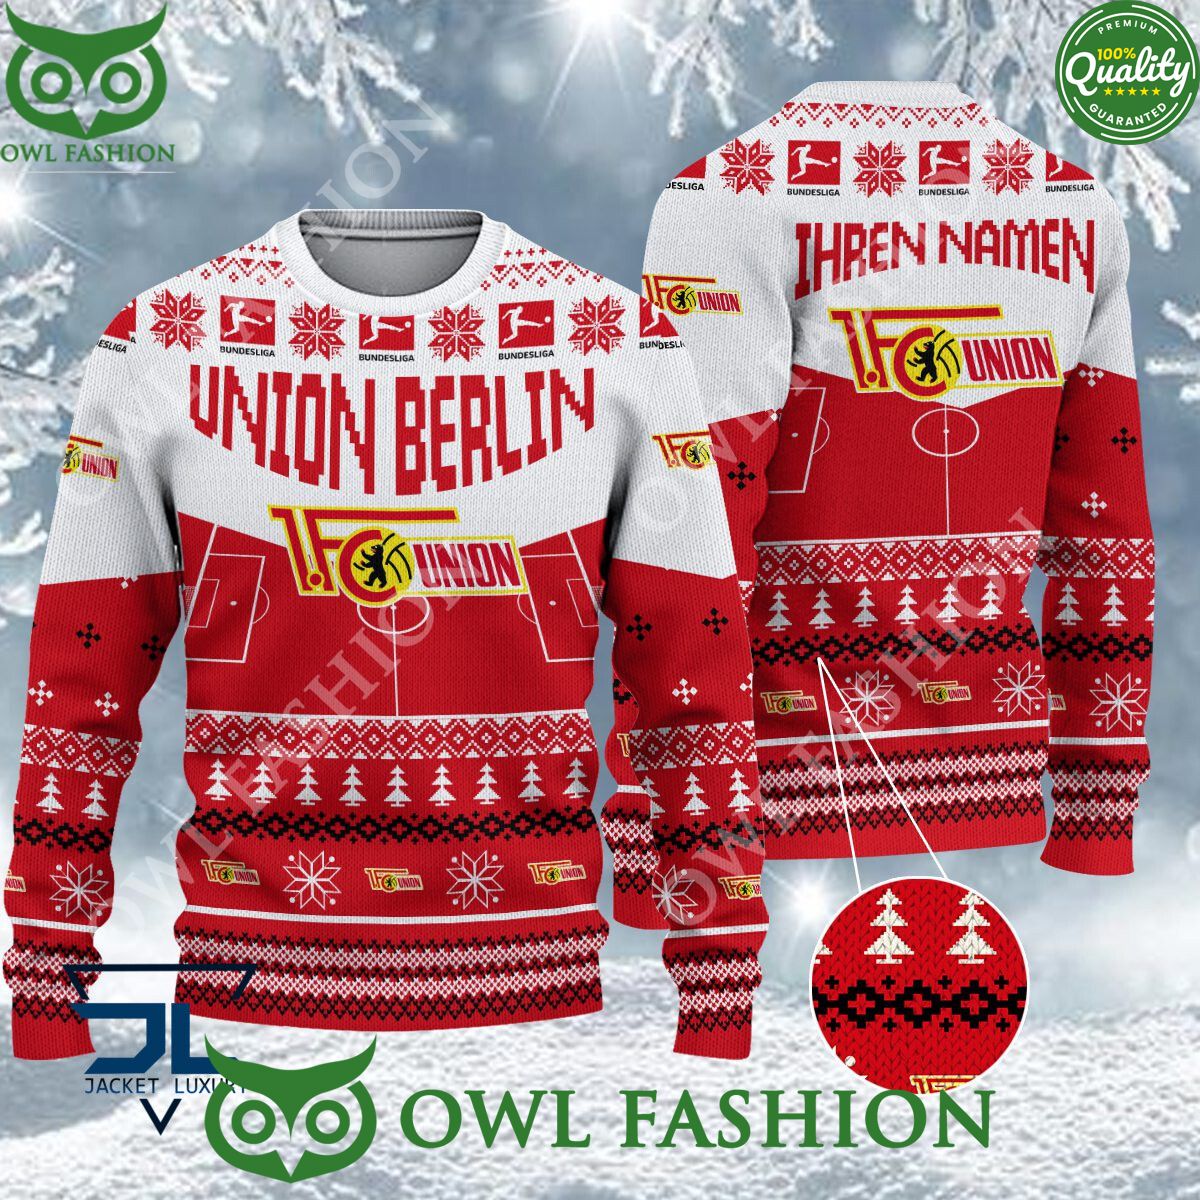 union berlin limited for bundesliga fans ugly sweater jumper 1 YX9R9.jpg